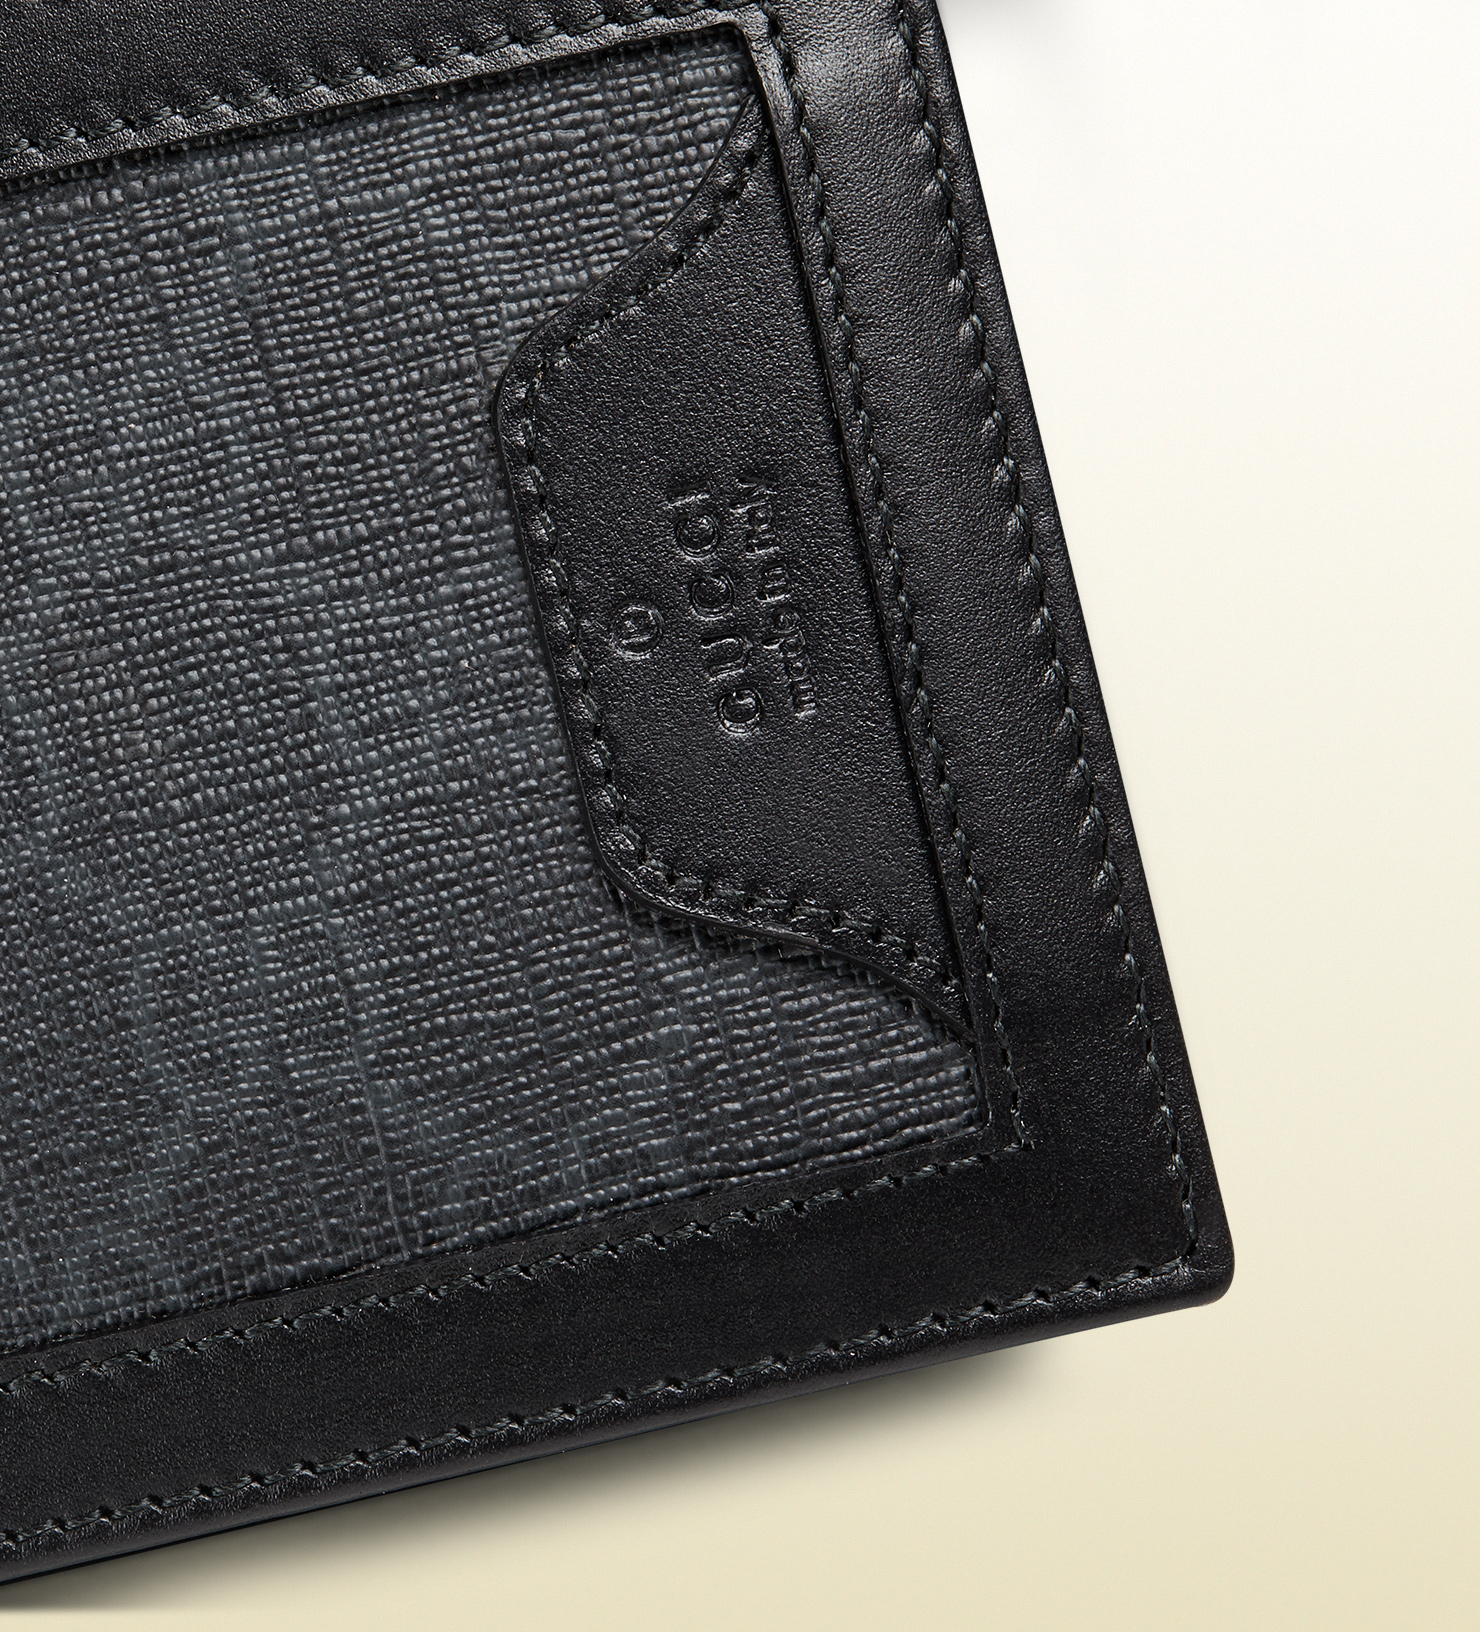 Lyst - Gucci Gg Supreme Canvas Bi-fold Wallet in Black for Men